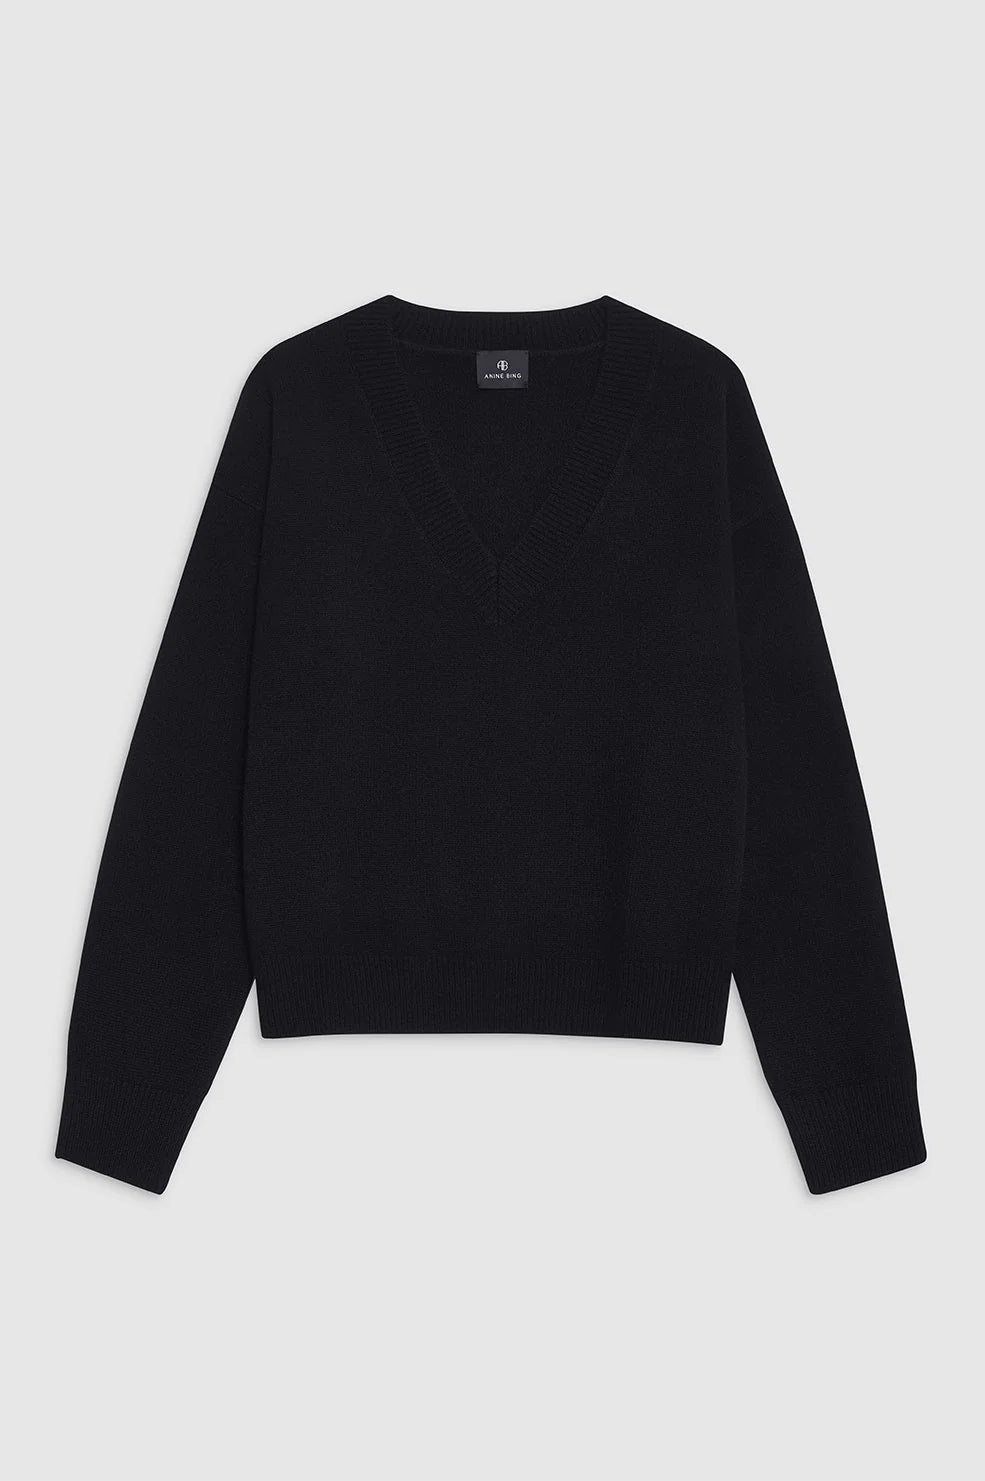 Lee Sweater in Black